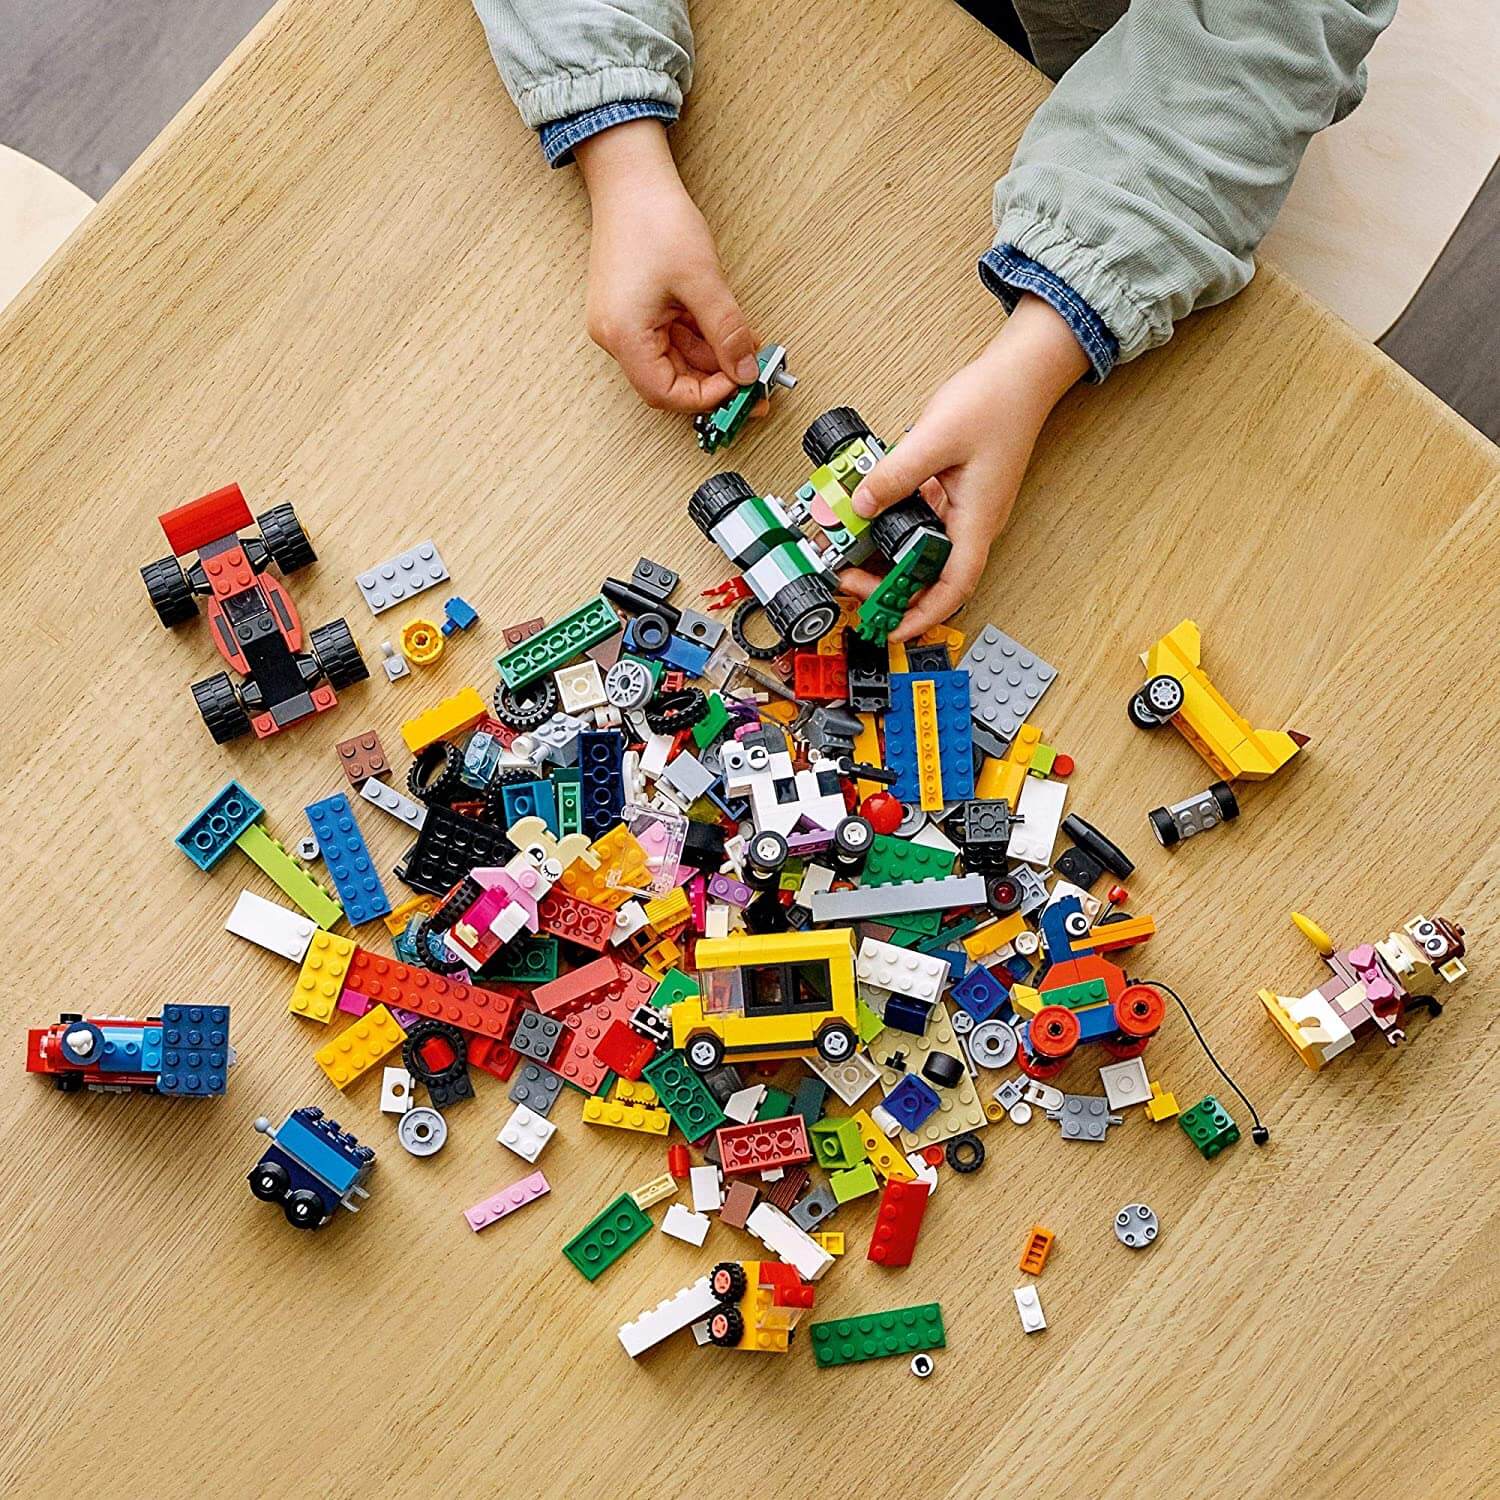 LEGO Classic Bricks and Wheels 653 Piece Building Set (11014)